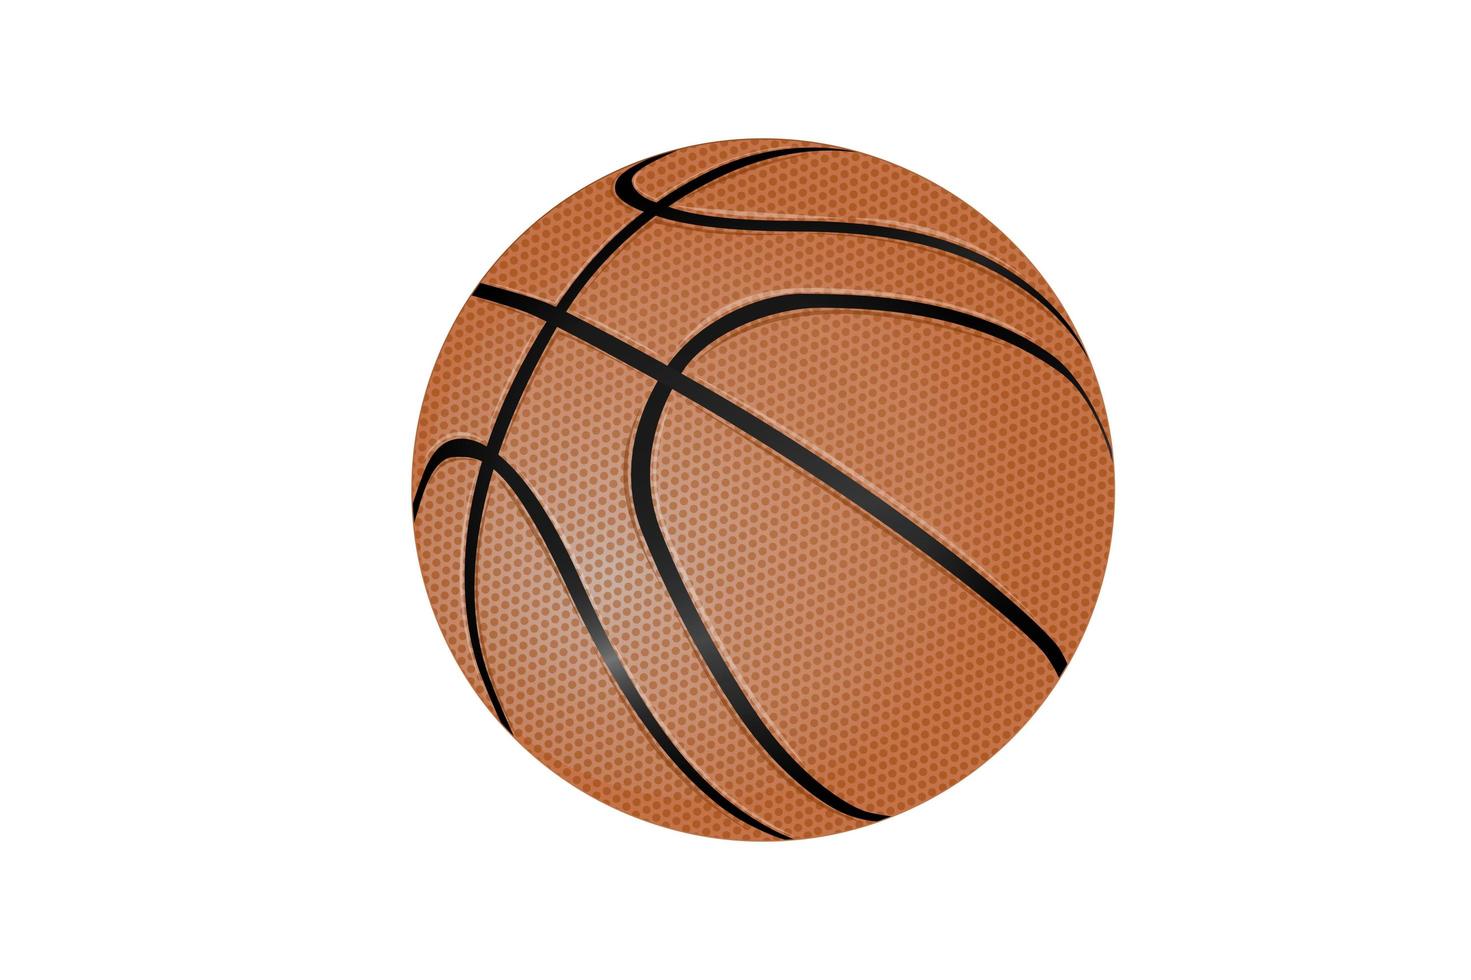 palla da basket su uno sfondo bianco. foto